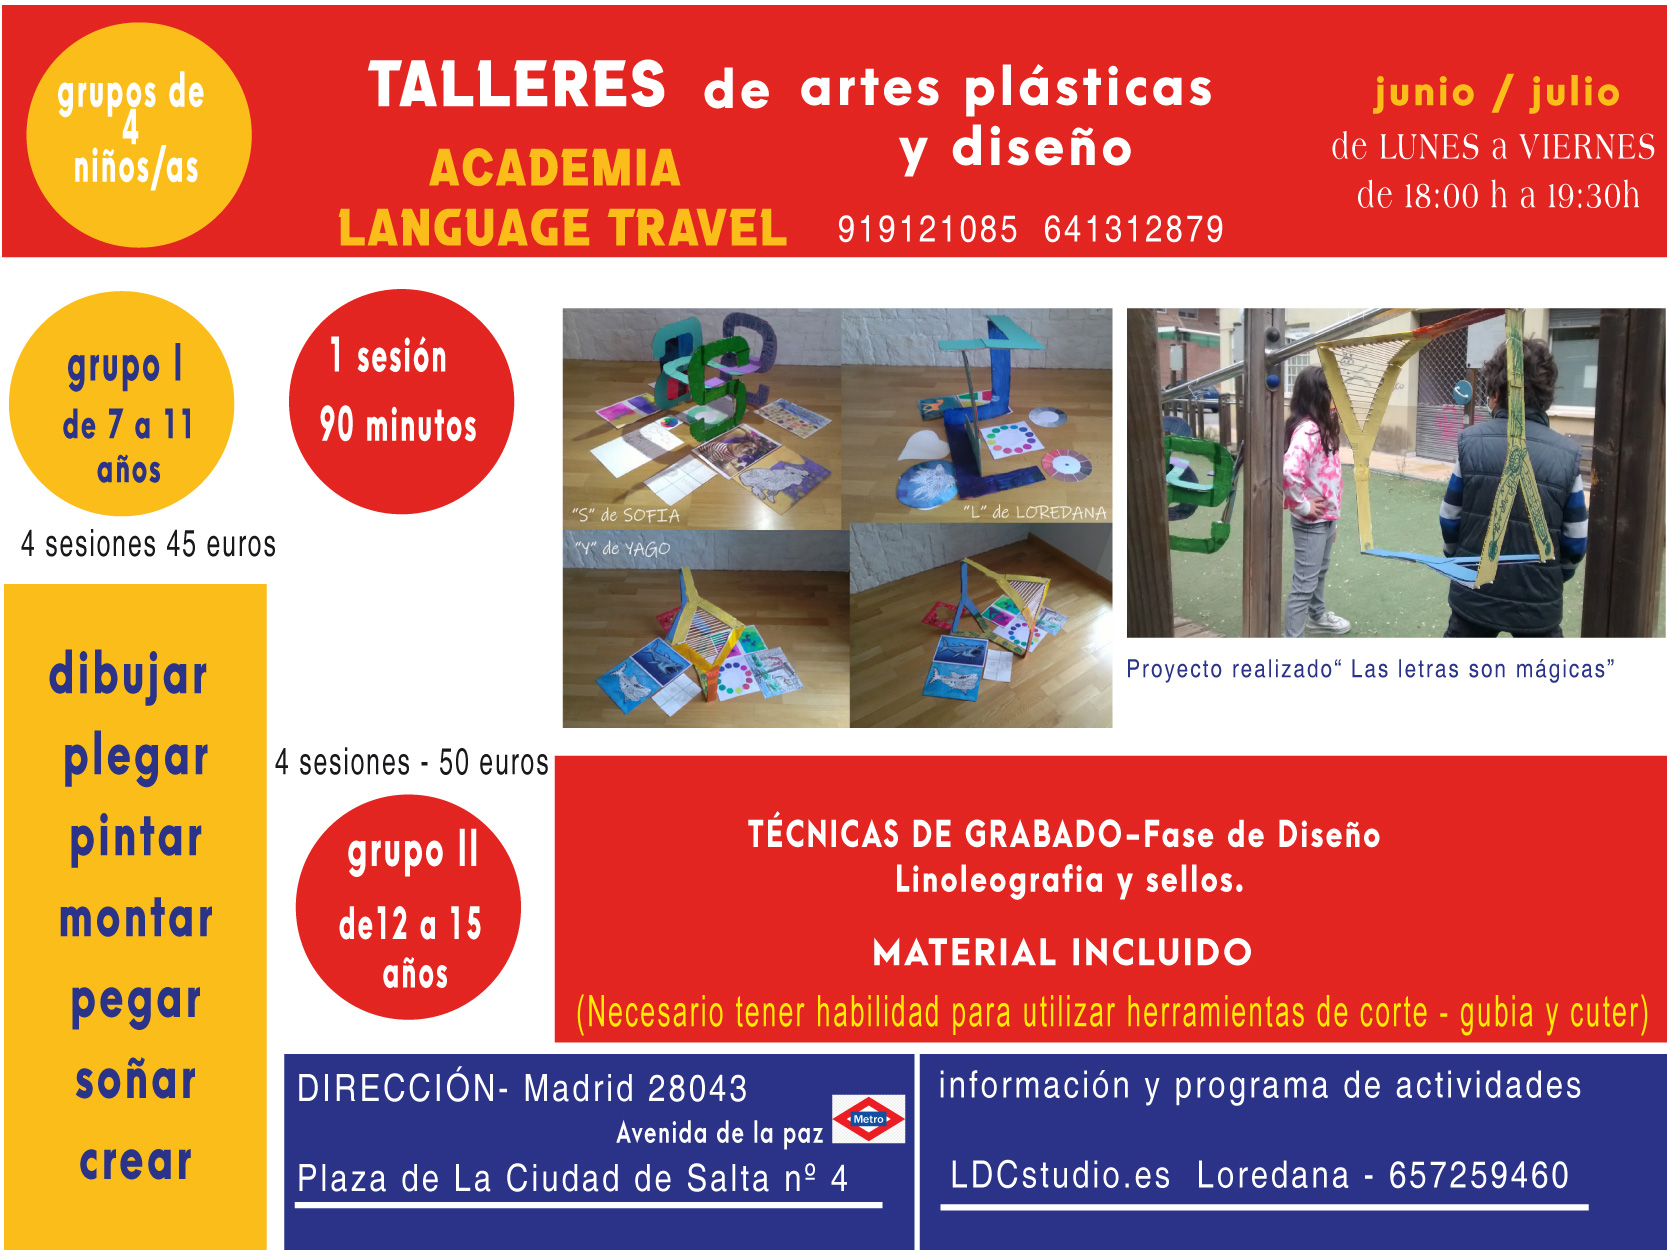 ldc-studio-loredana-david-costea-talleres infantiles